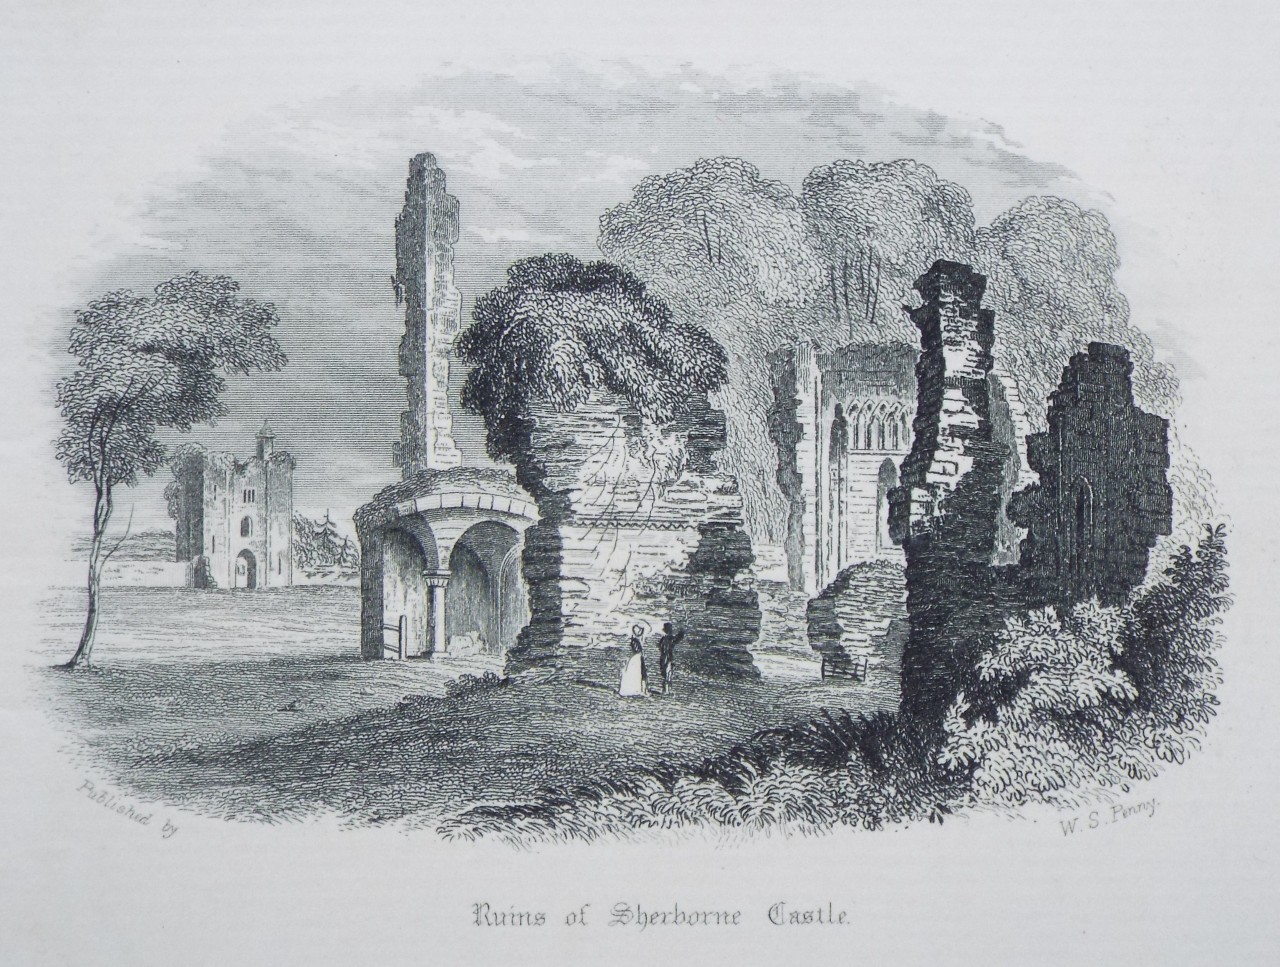 Steel Vignette - Ruins of Sherborne Castle.